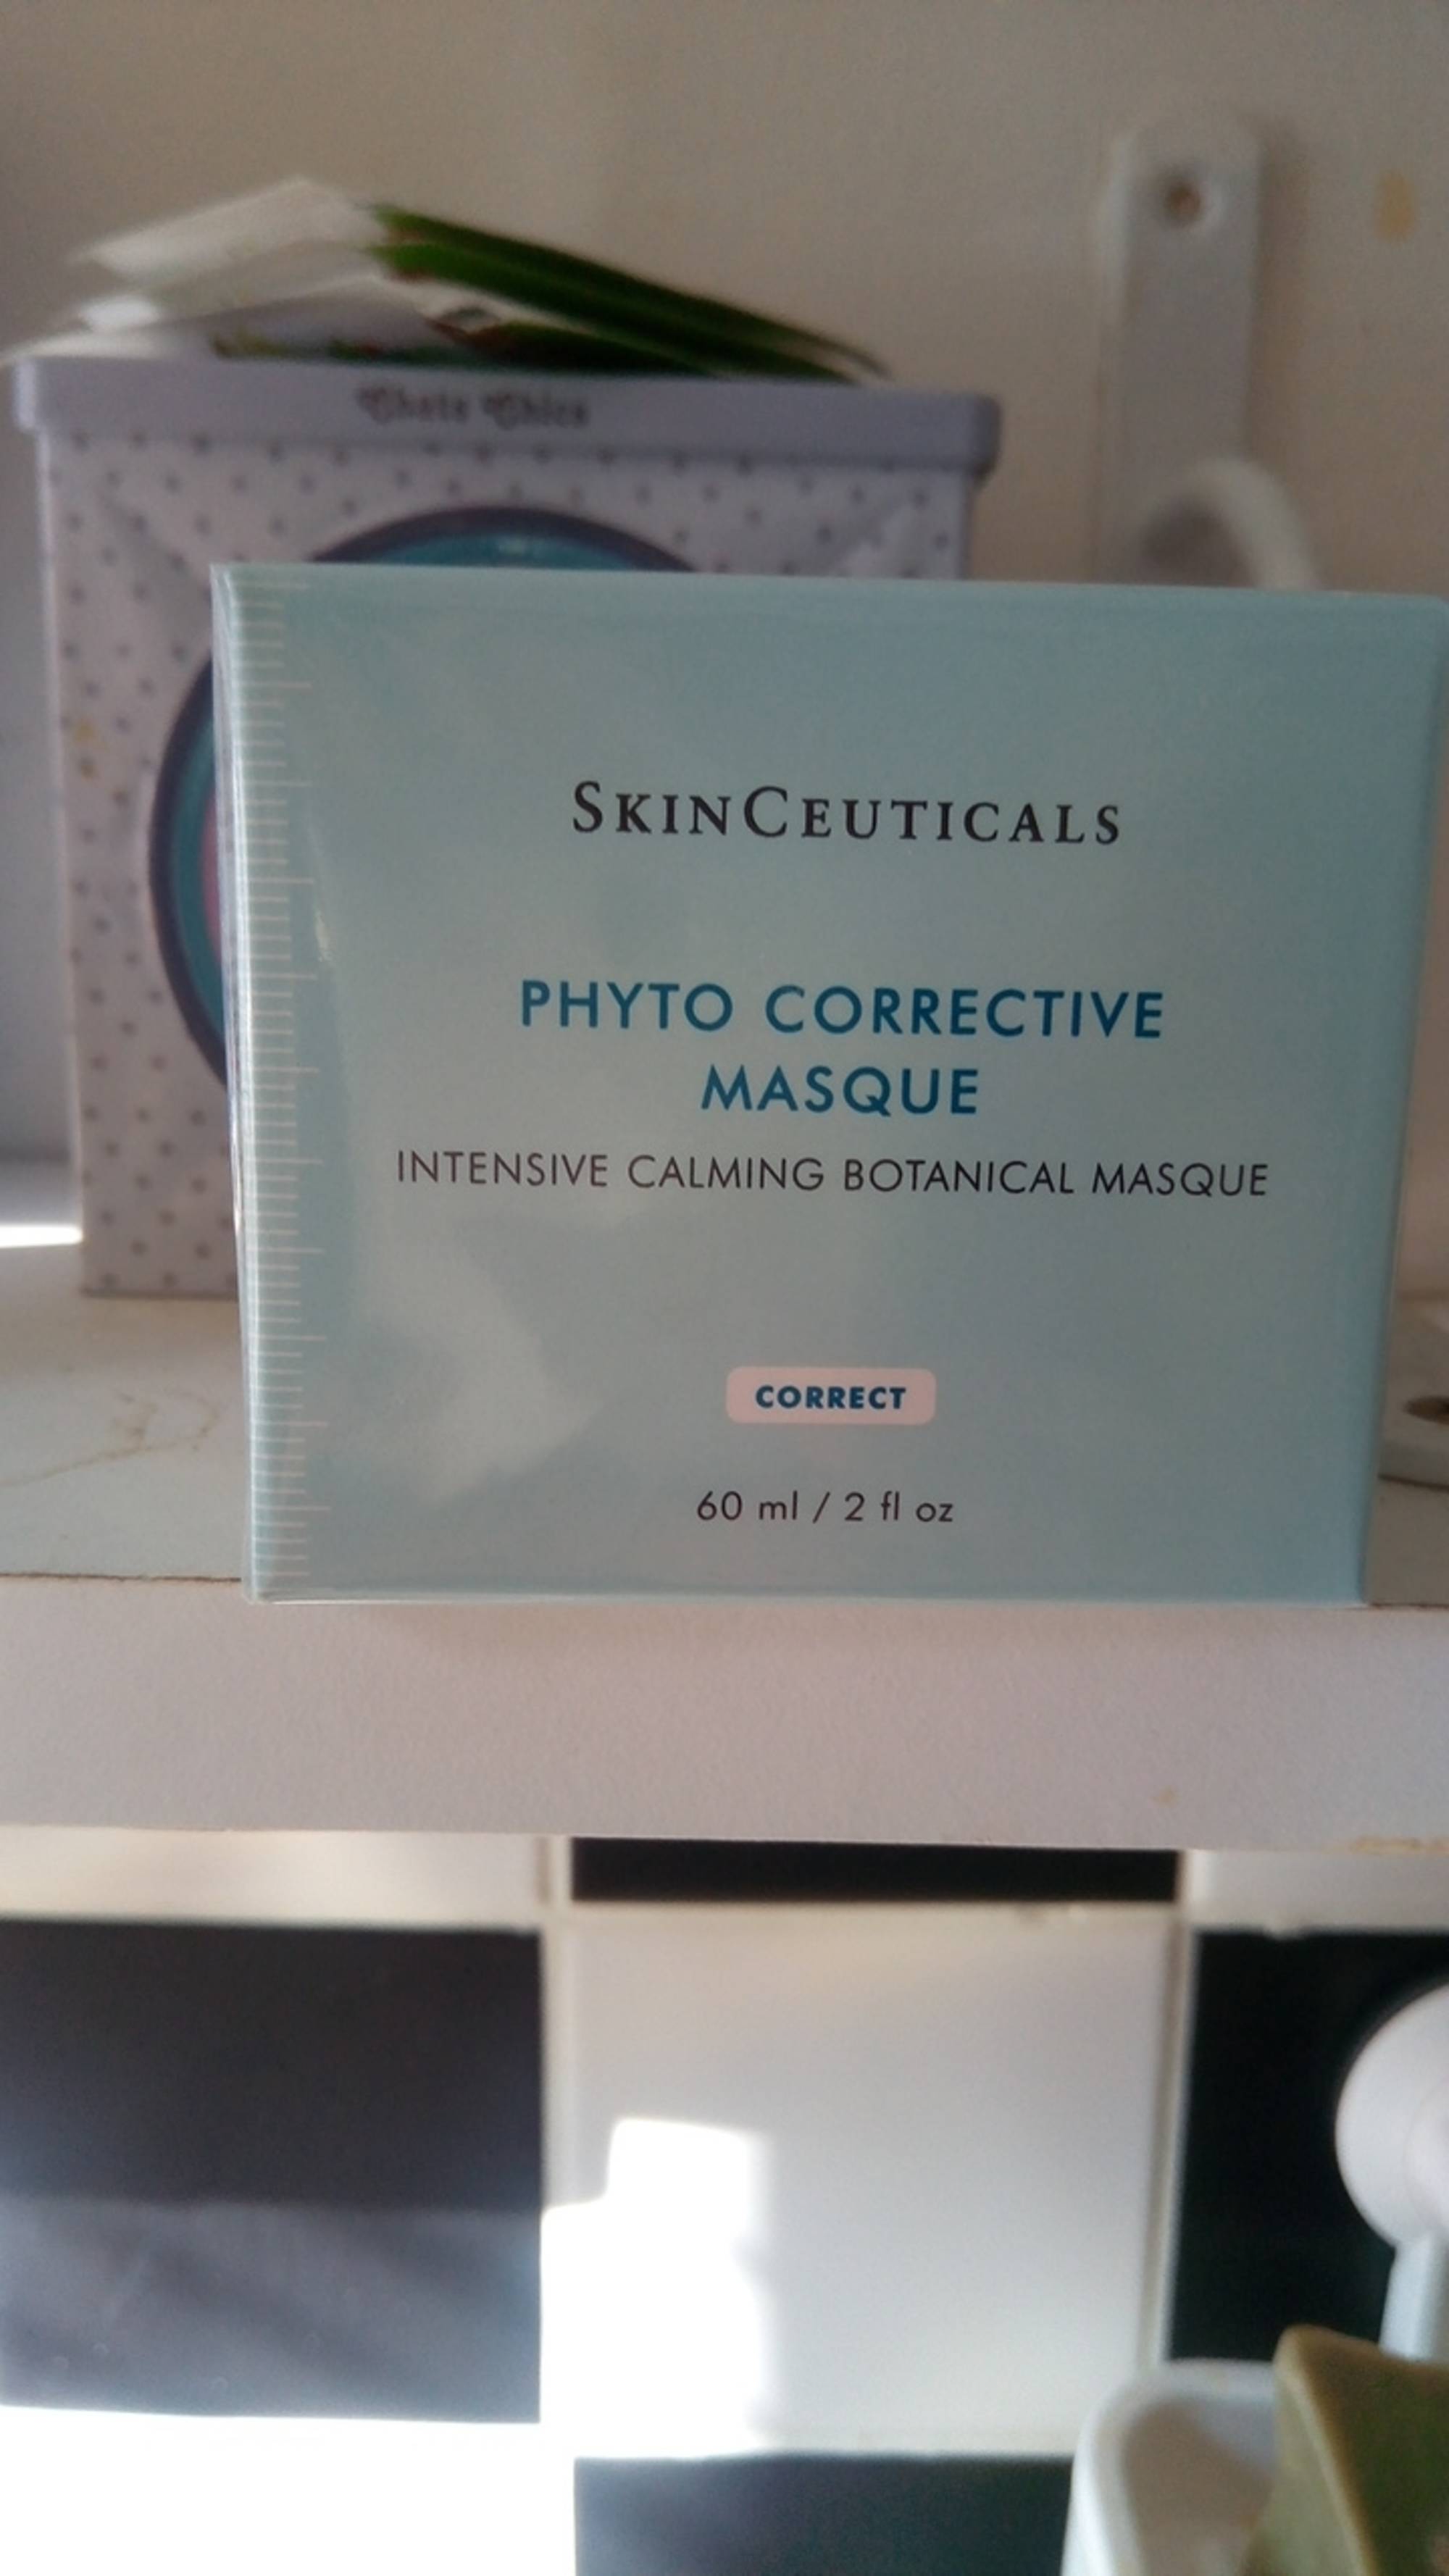 SKINCEUTICALS - Phyto corrective masque